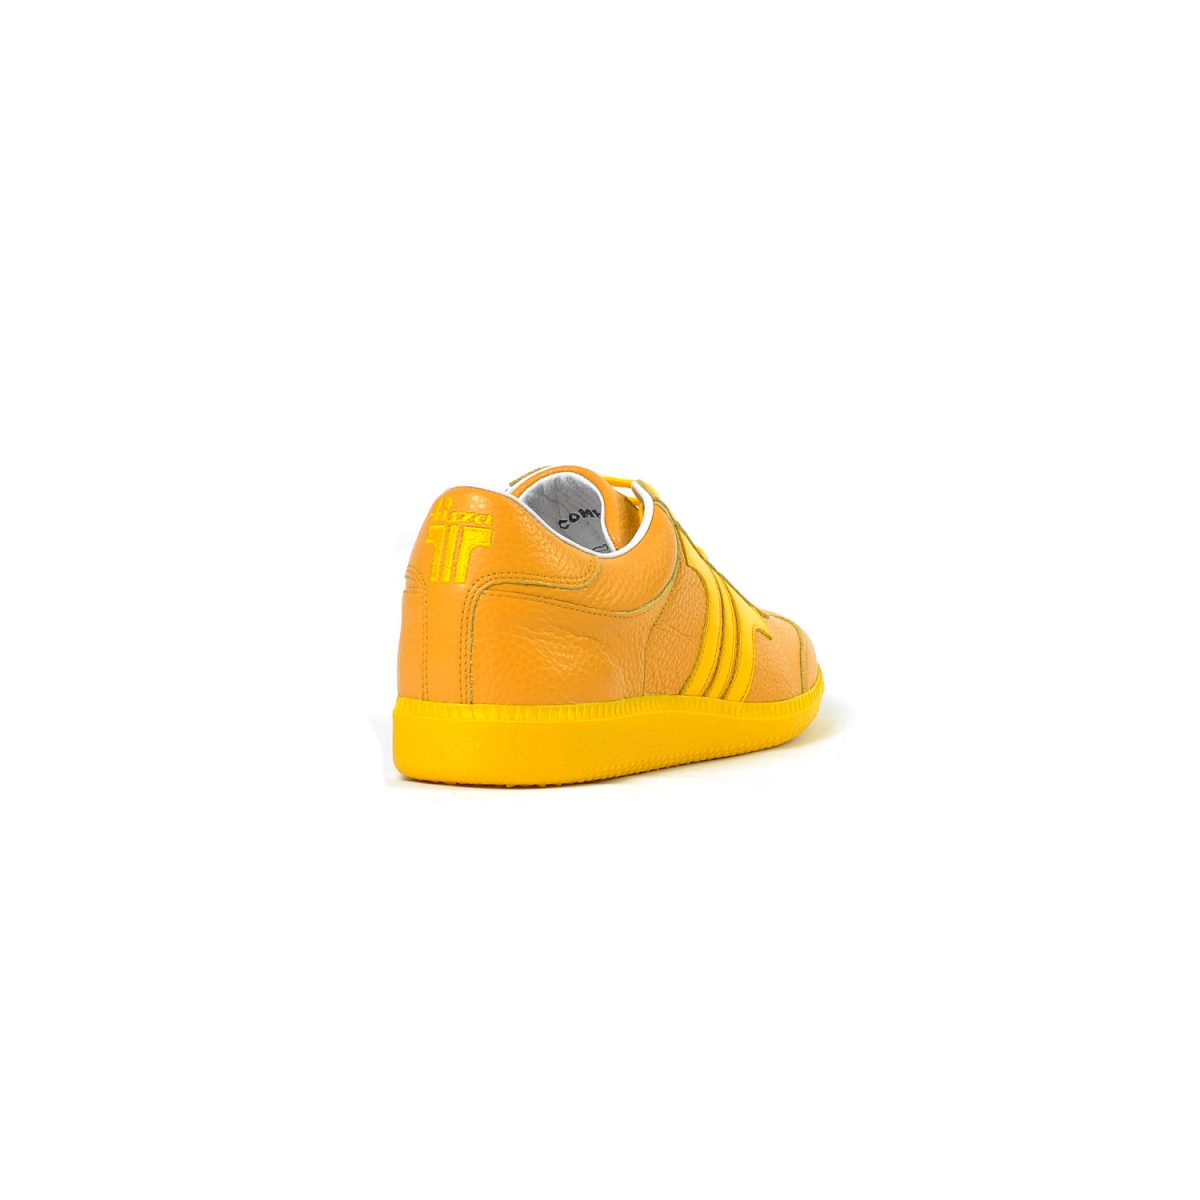 Tisza shoes - Compakt - Yellow